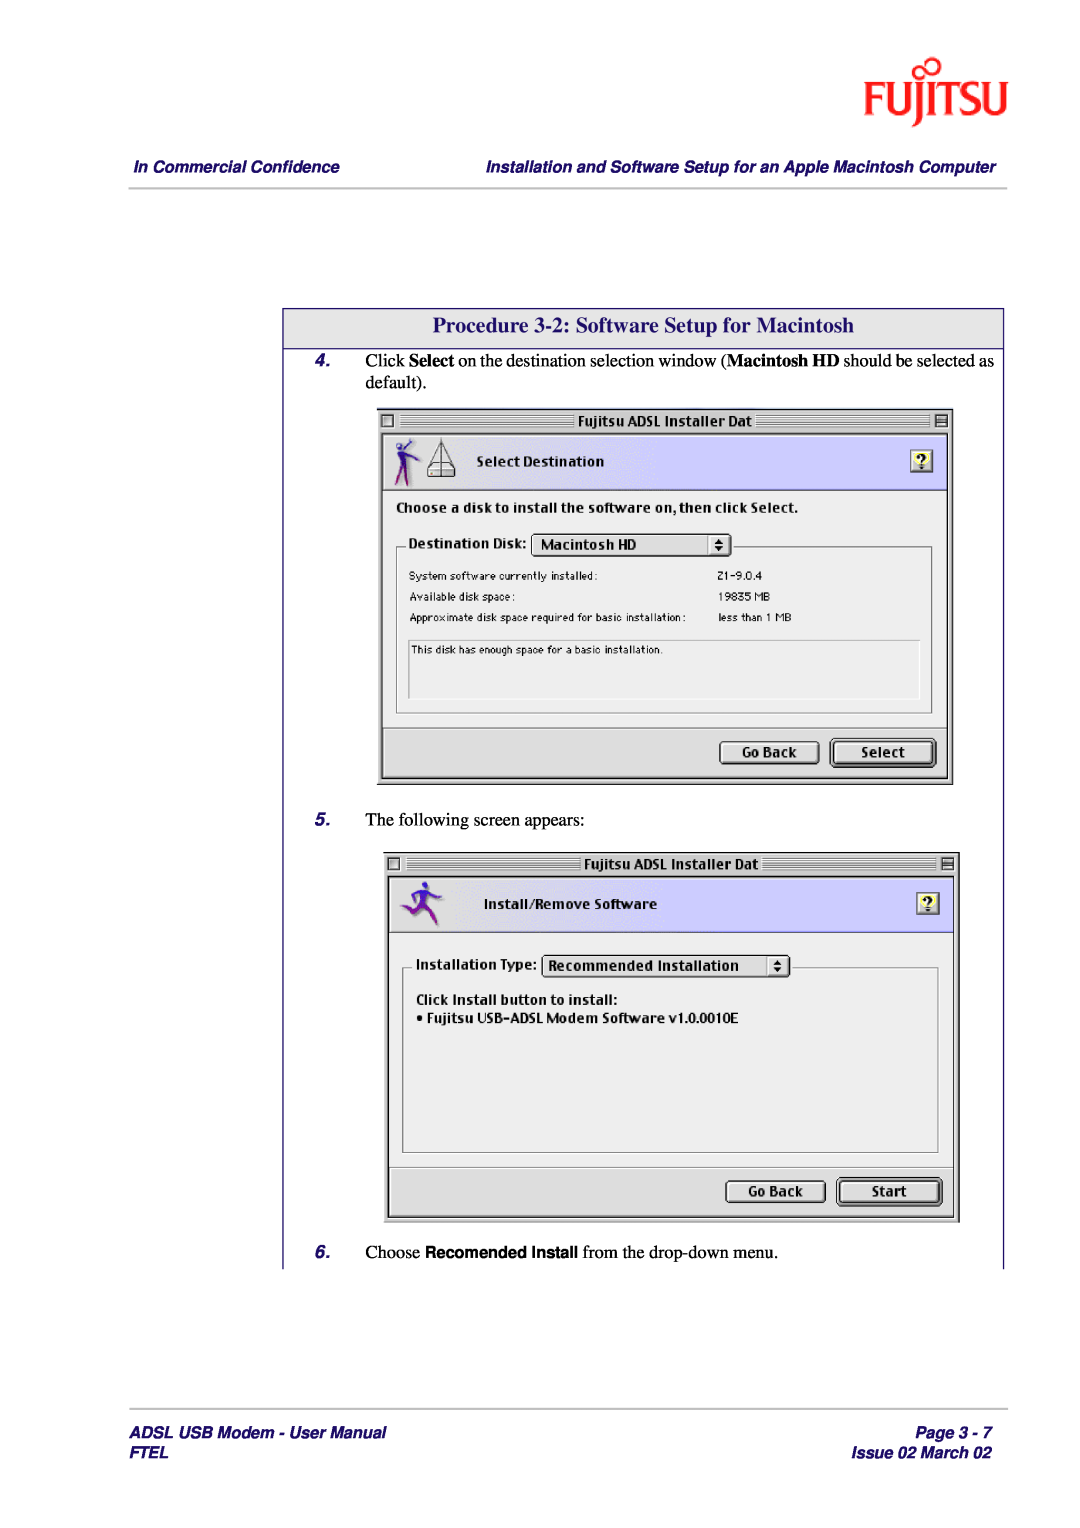 Fujitsu 3XAX-00803AAS Procedure 3-2 Software Setup for Macintosh, In Commercial Confidence, ADSL USB Modem - User Manual 